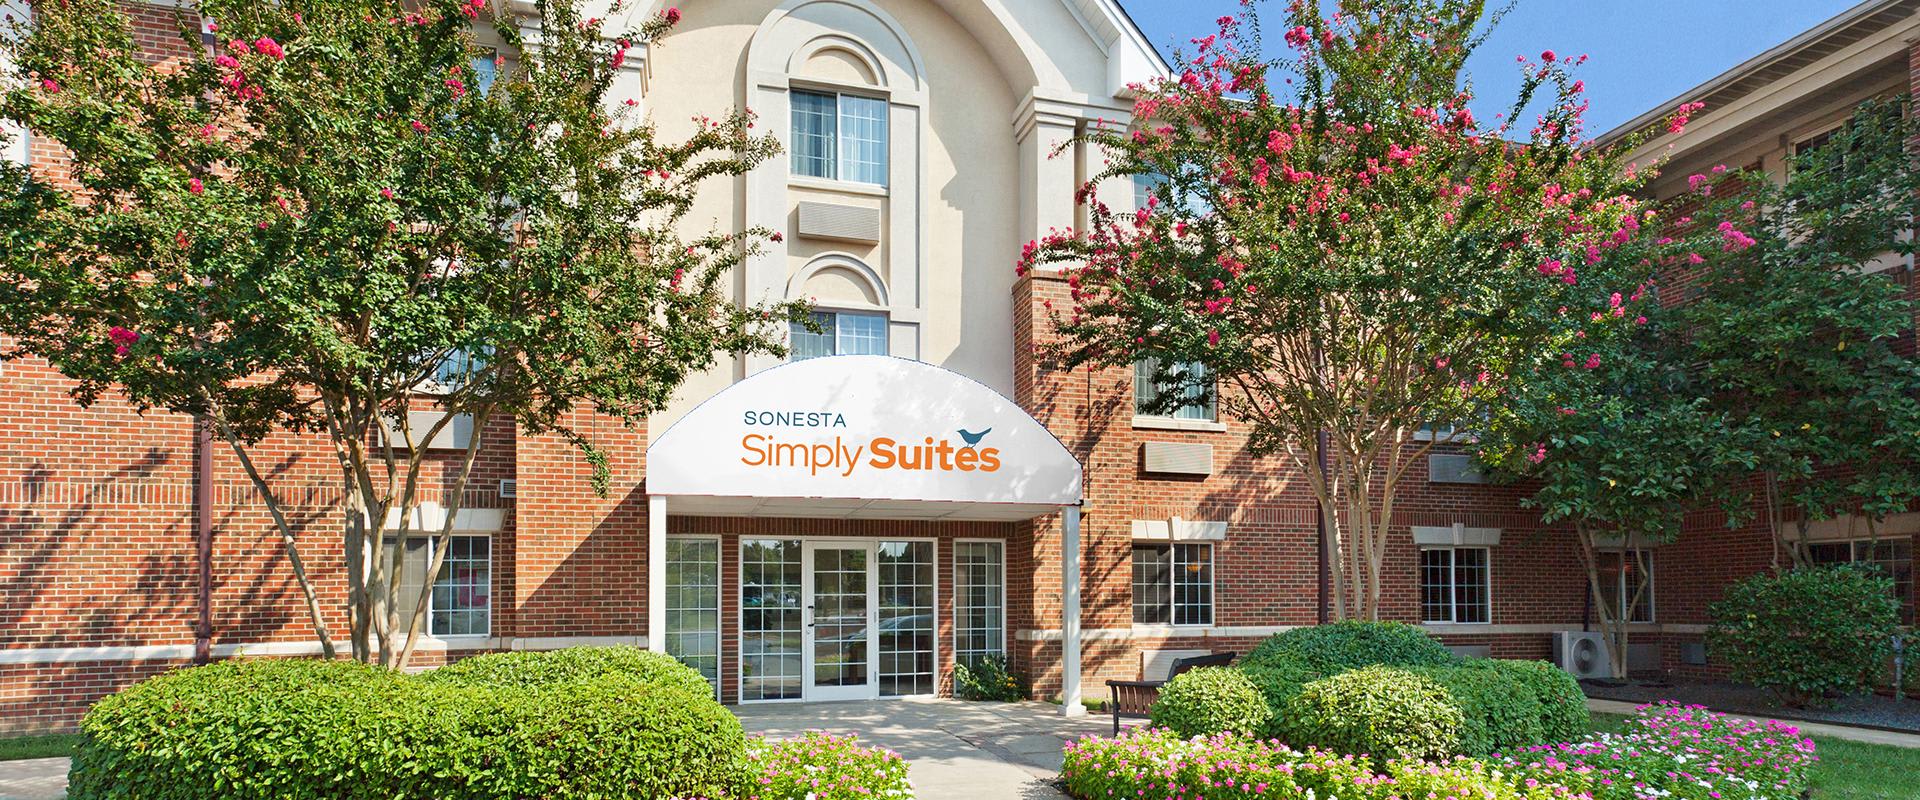 Sonesta Simply Suites Charlotte University Hotel Exterior Entrance